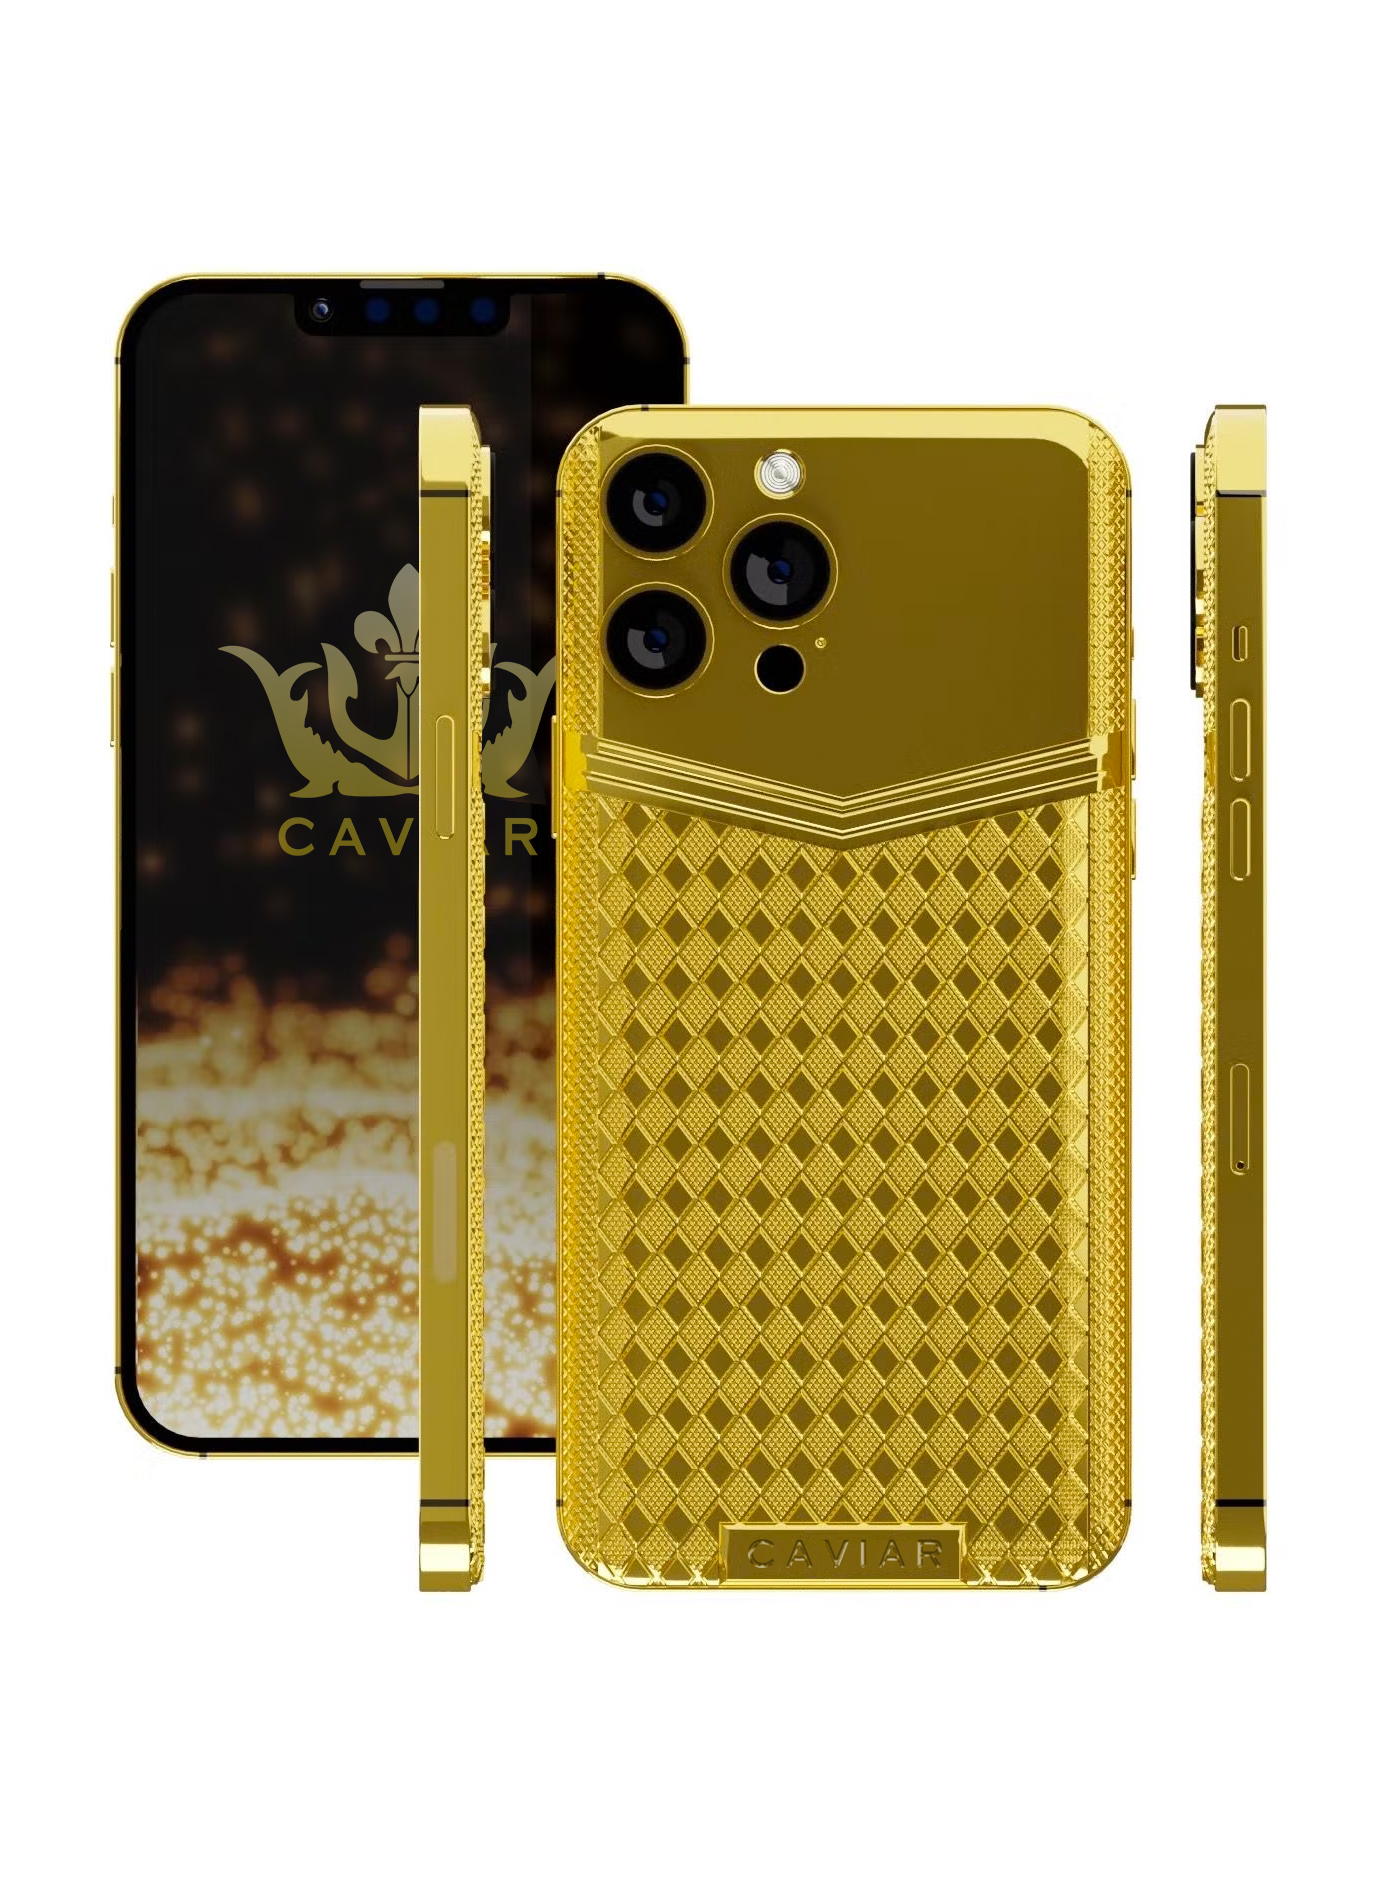 Caviar Luxury 24K Gold Customized iPhone 14 Pro Limited Edition 128 GB